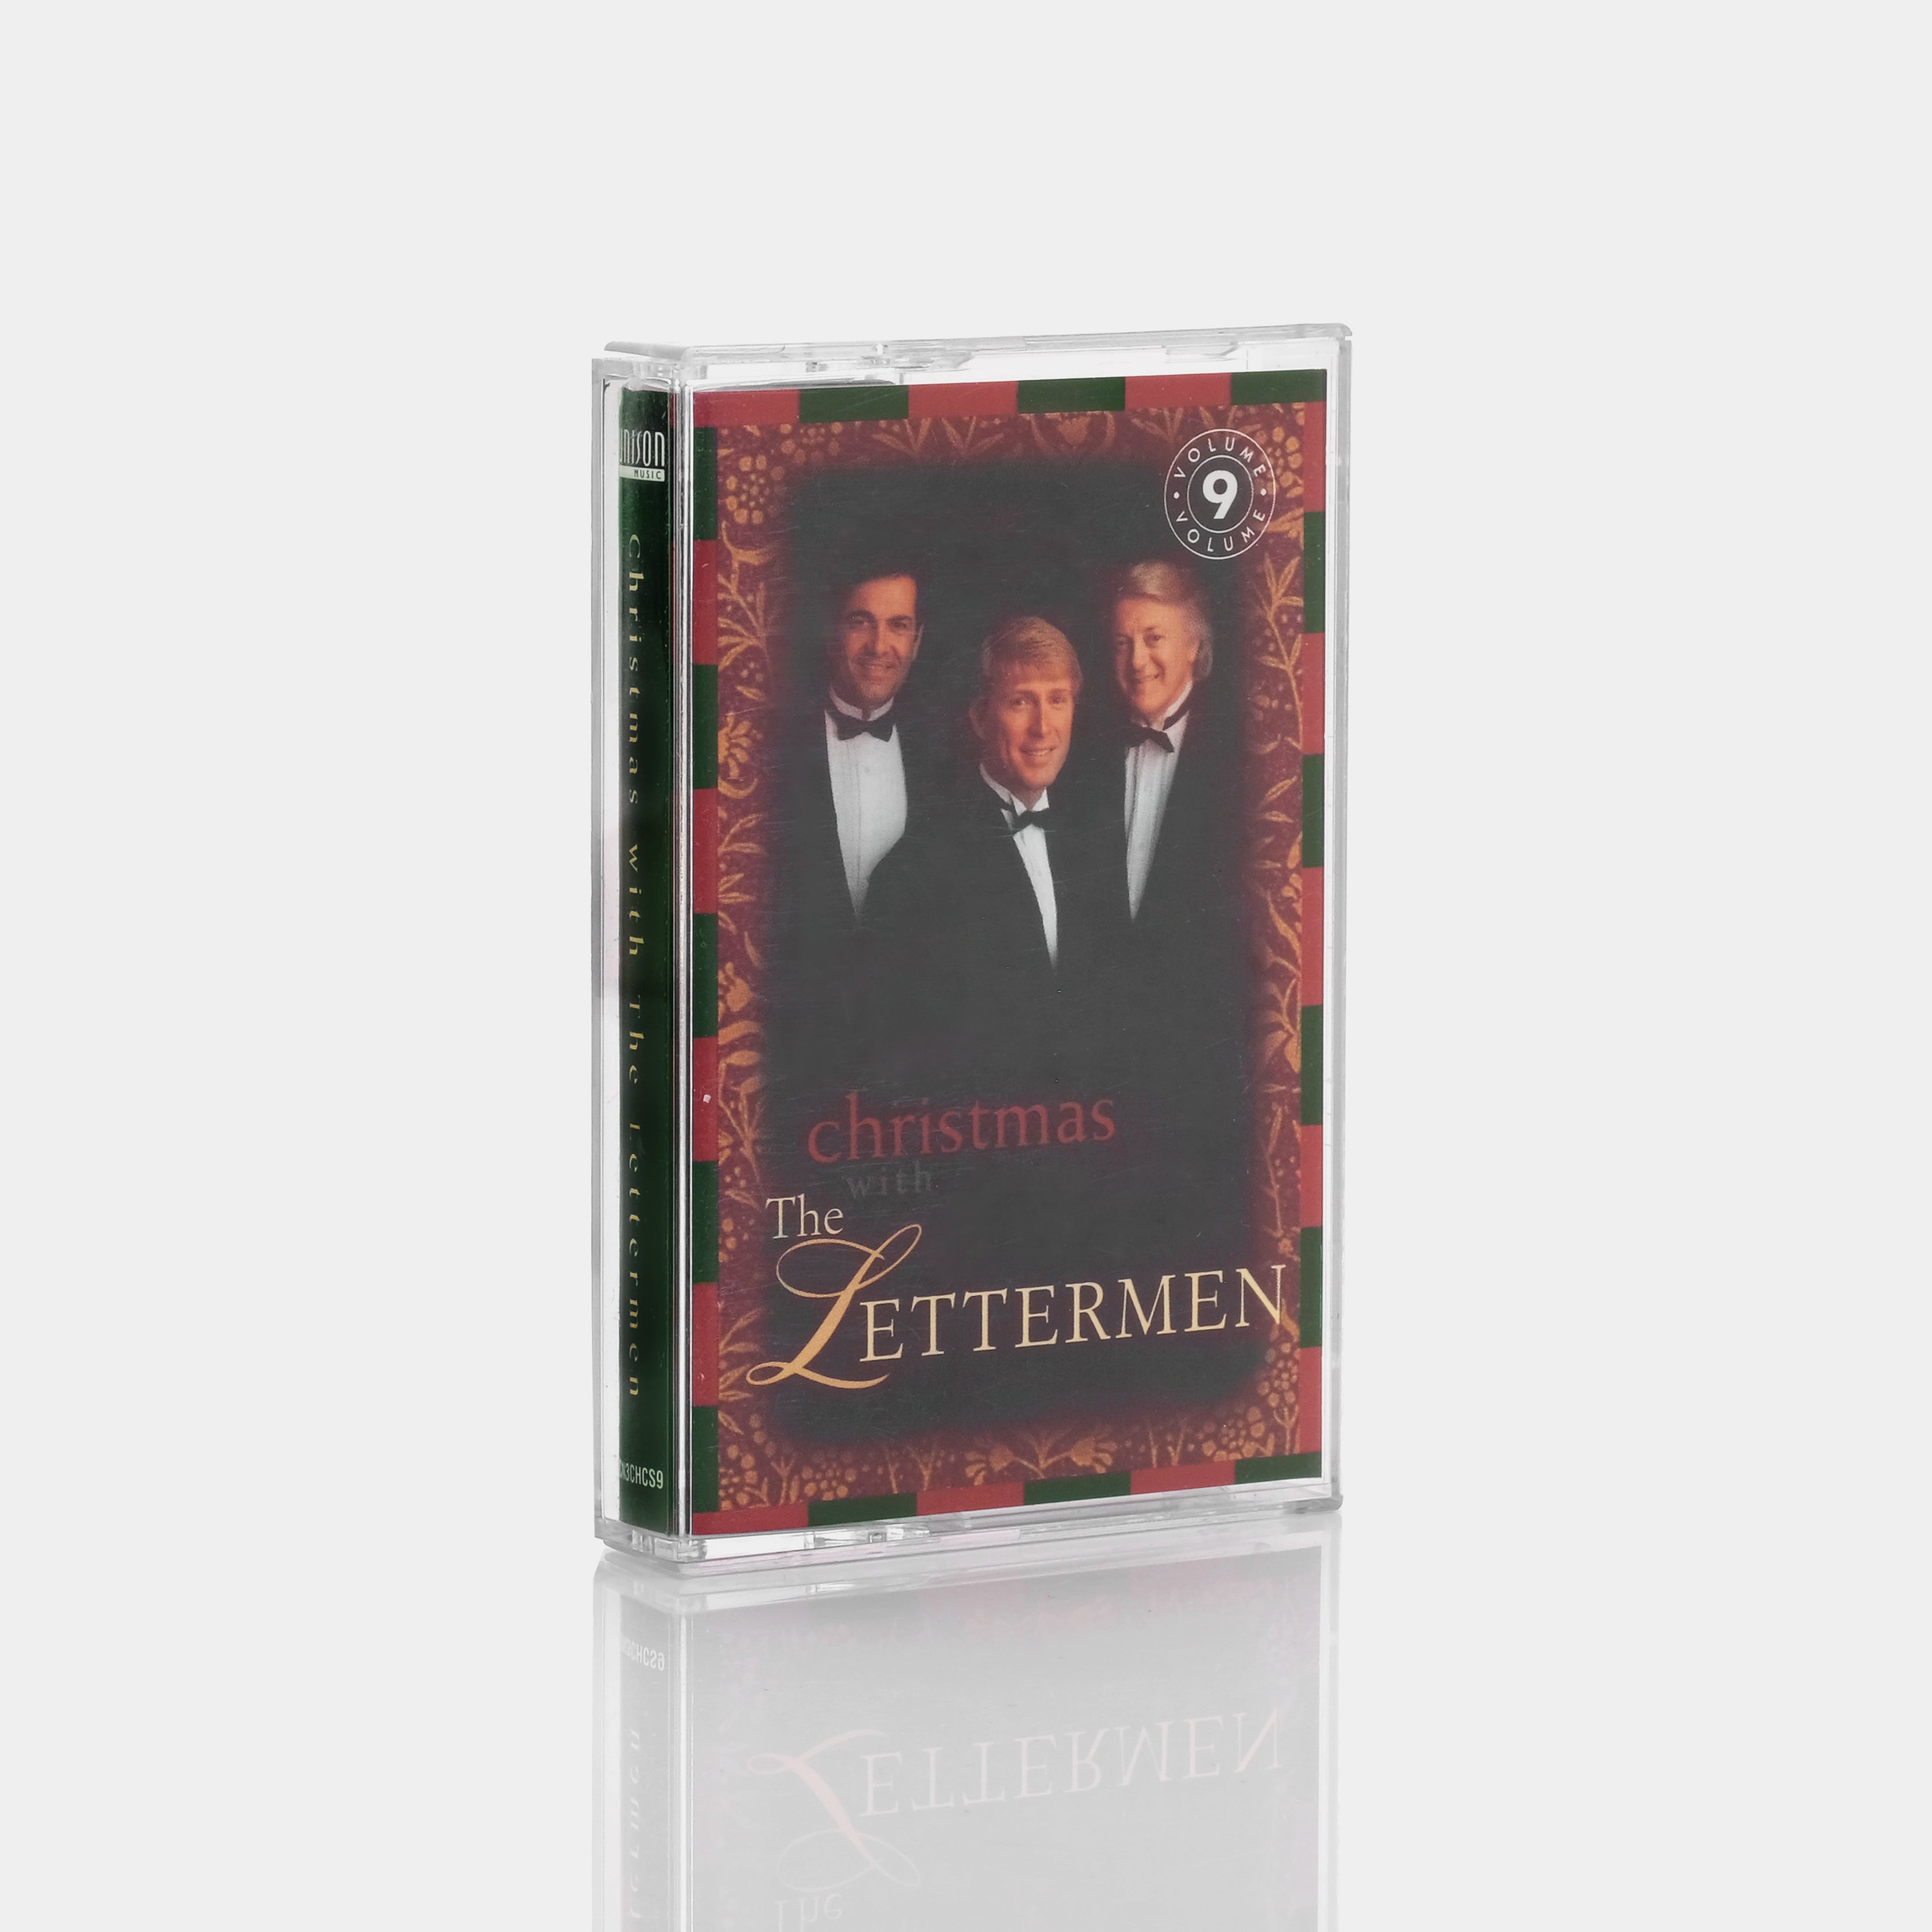 Christmas With The Lettermen Cassette Tape